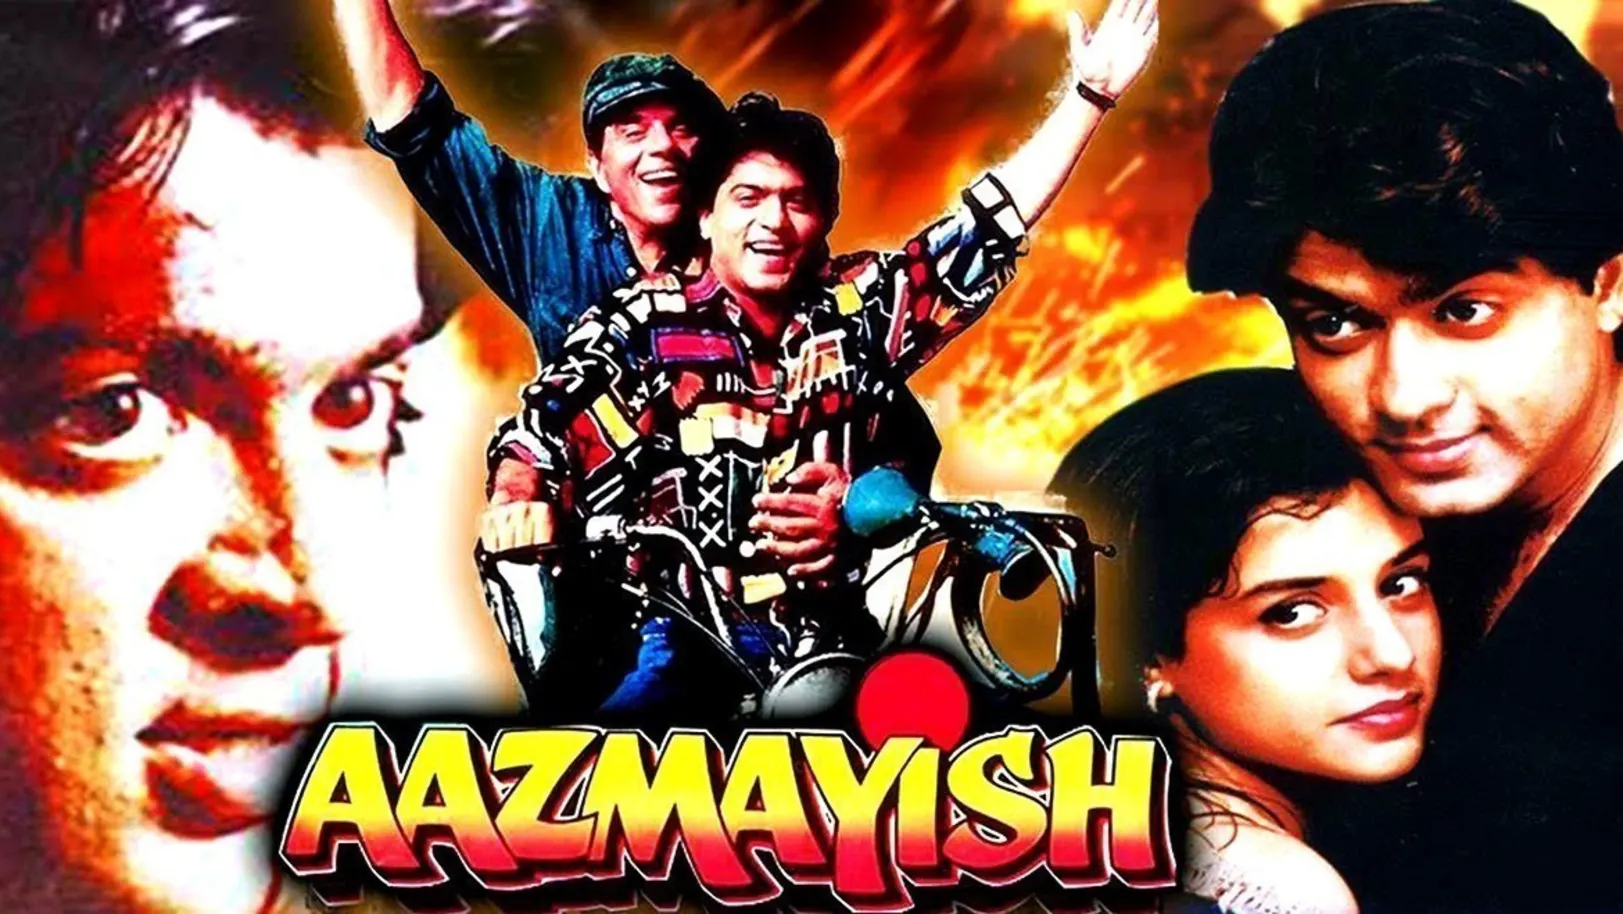 Aazmayish Movie